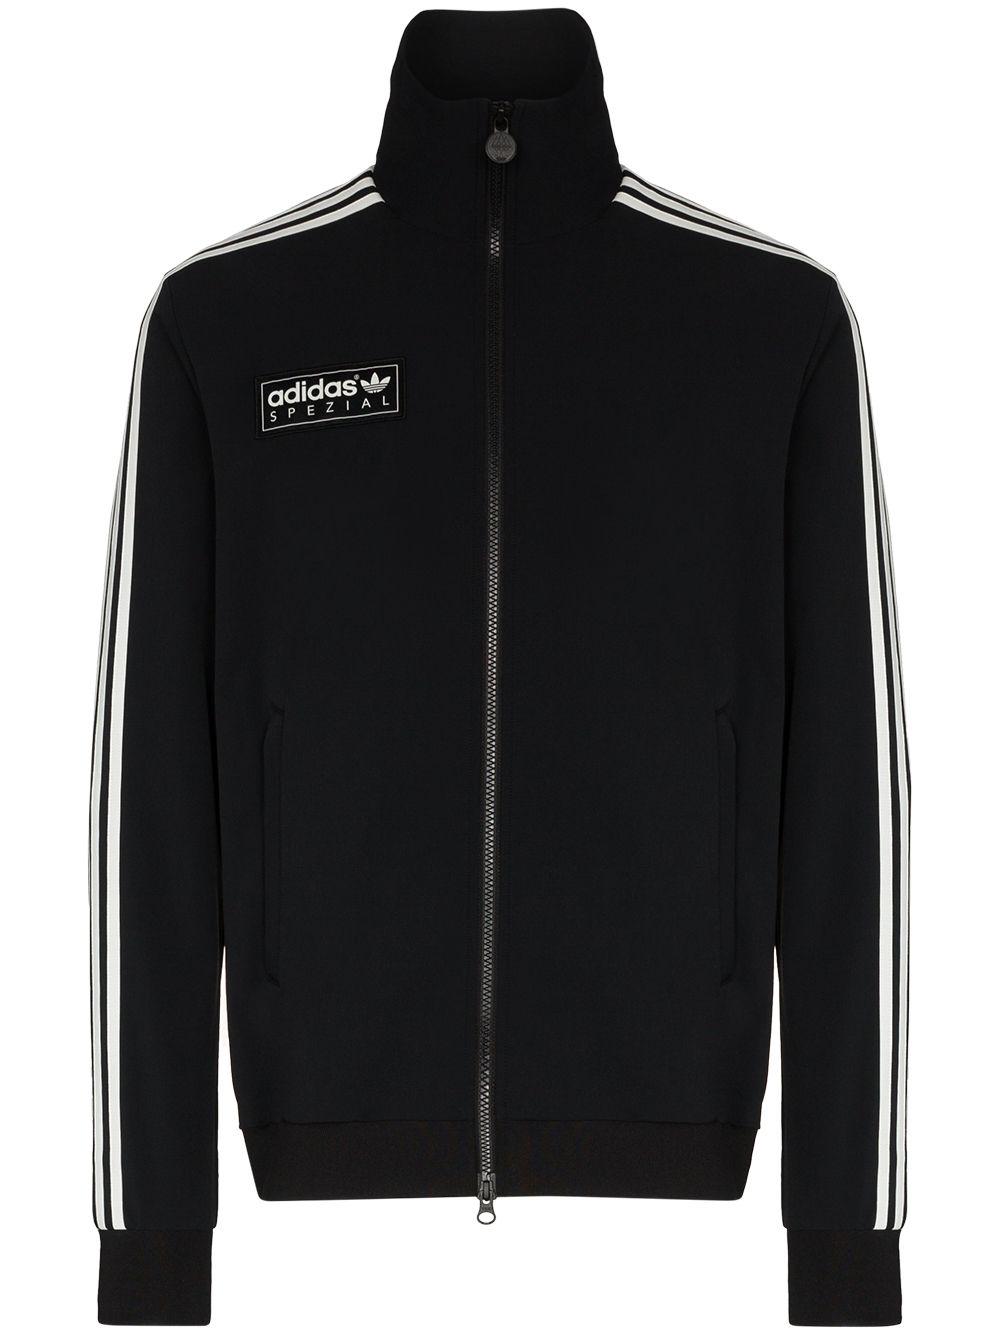 adidas Spezial Pleckgate Track Jacket in Black for Men - Lyst